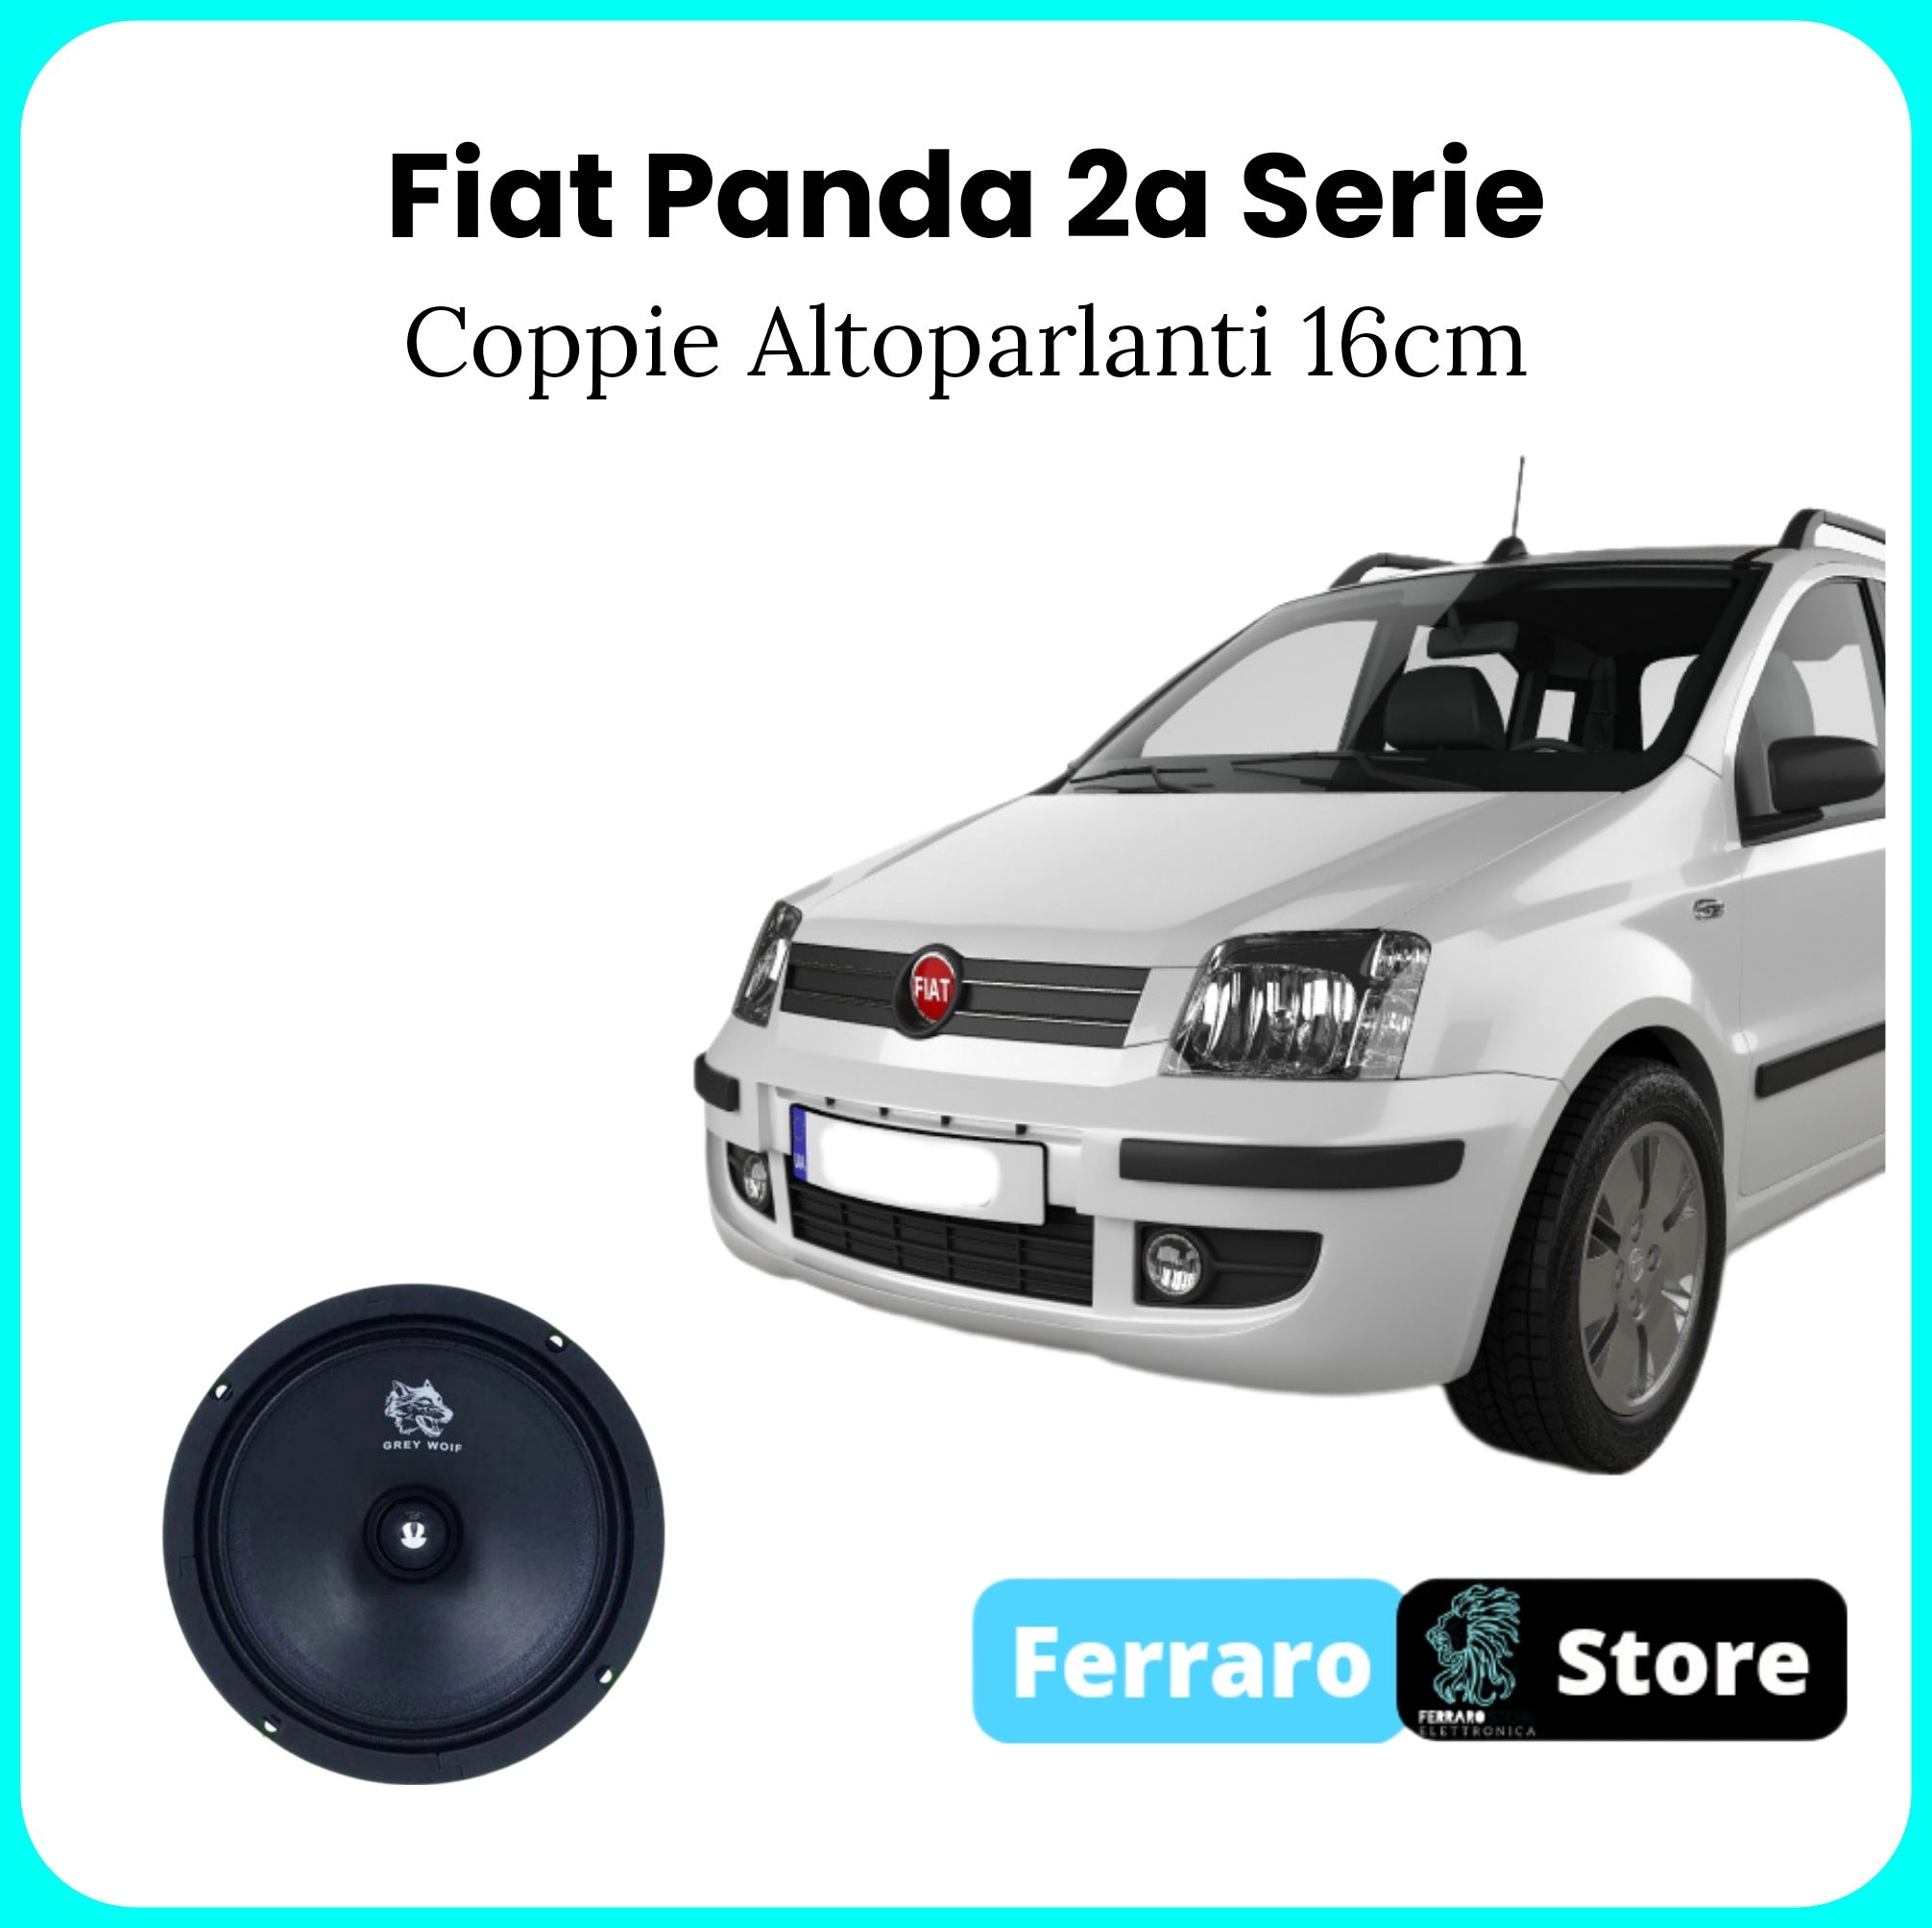 Autoradio per FIAT Panda 2a [ANDROID] - 2Din 7Pollici, Bluetooth, Nav –  Ferraro Store